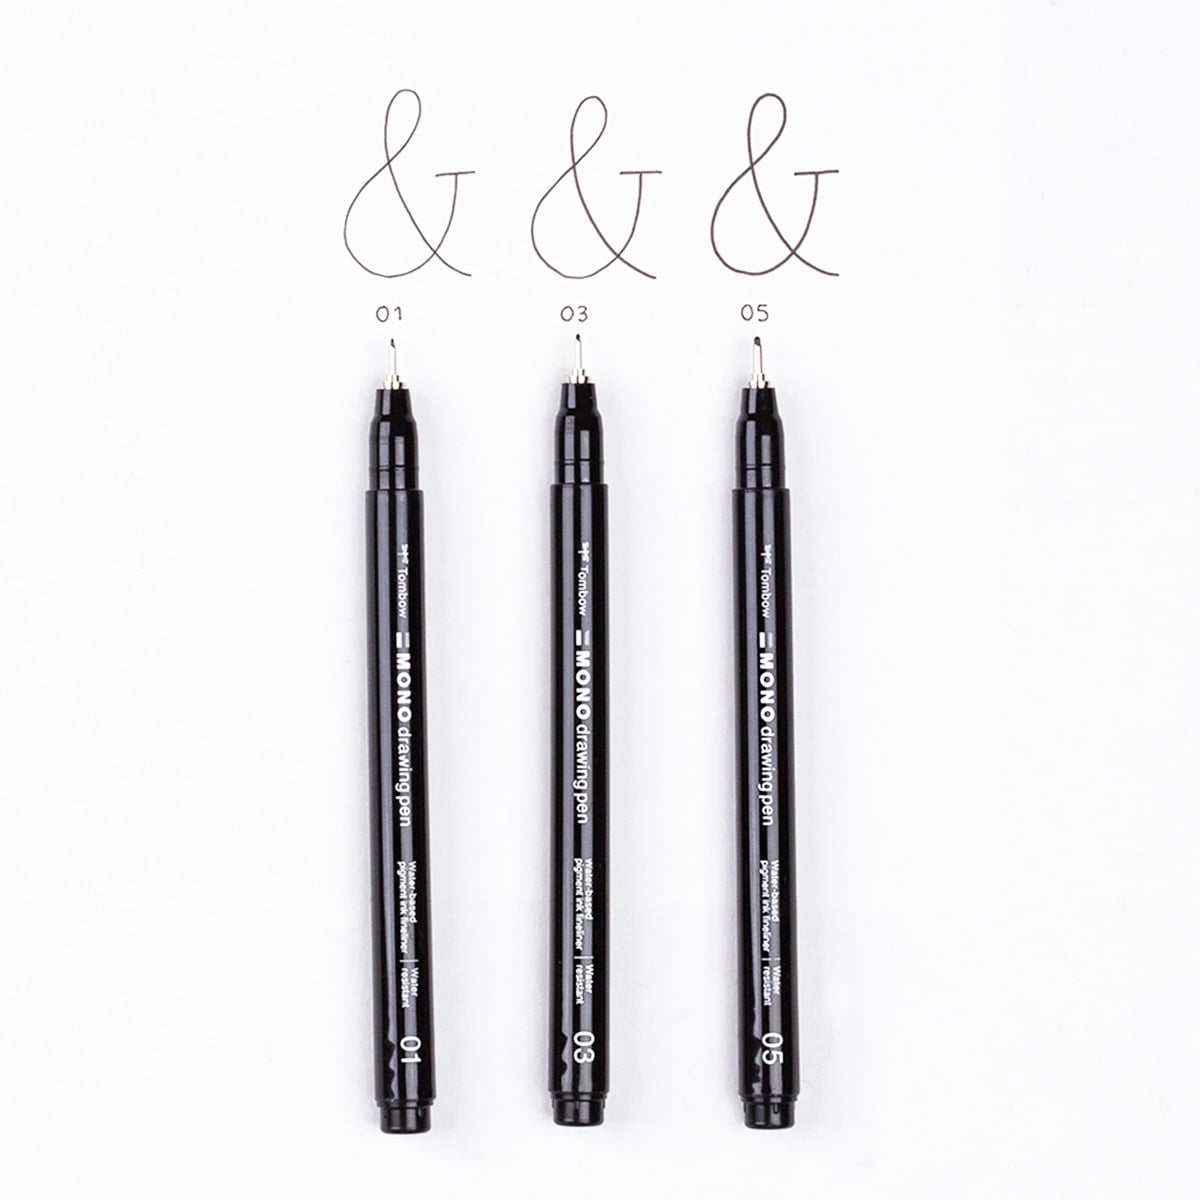 Amazon.com: uni-ball Uni Pin Drawing Pen 0.3mm Black Ink : Office Products